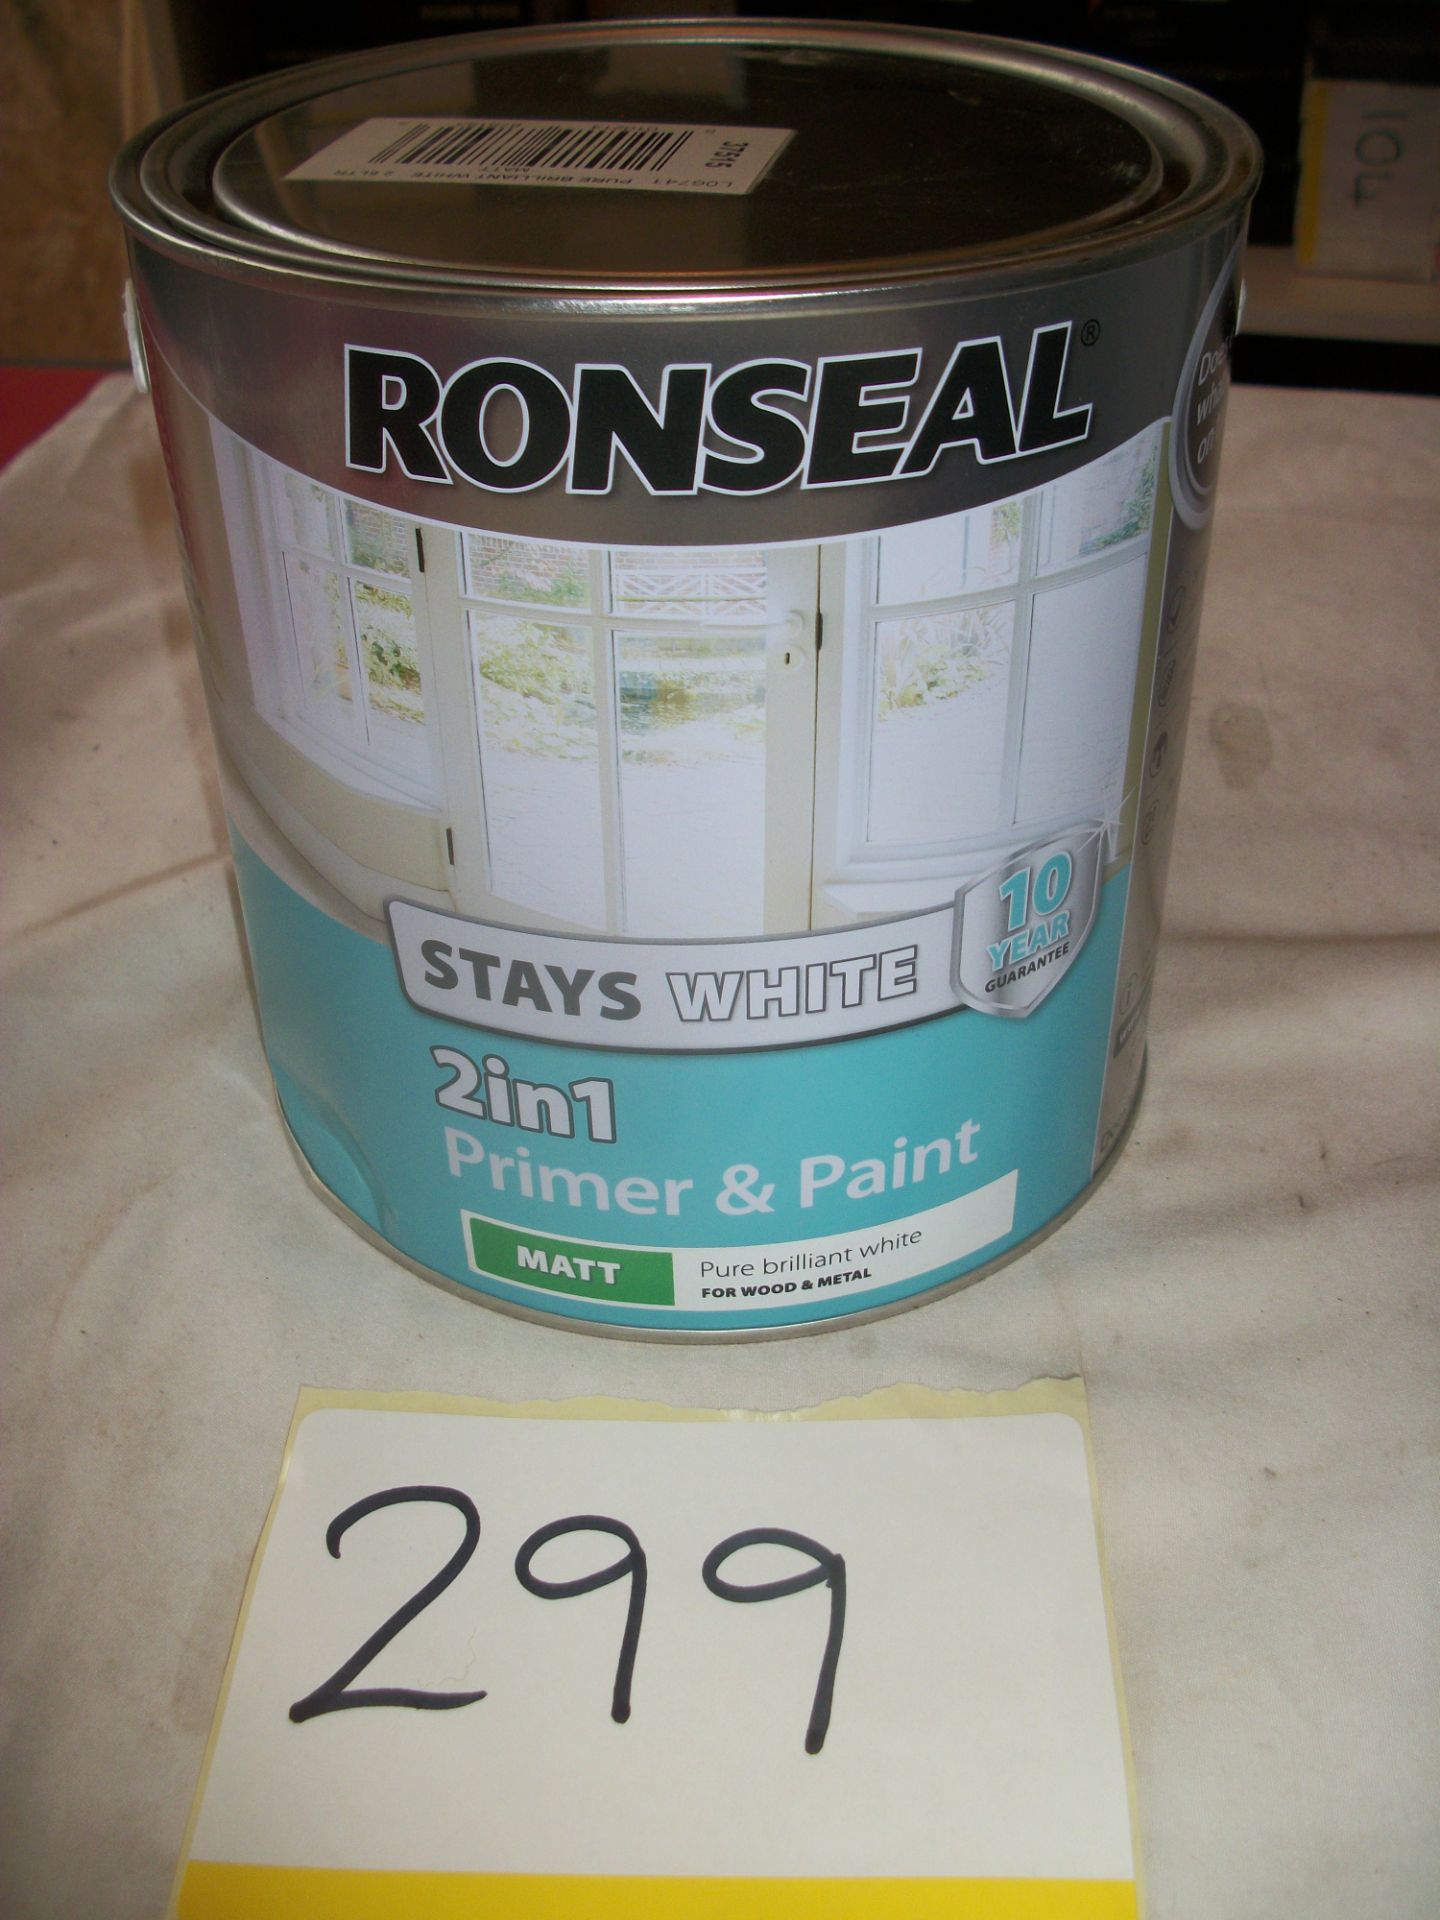 Ronseal Stays White 2in1 Primer & Paint Matt Pure Brilliant White